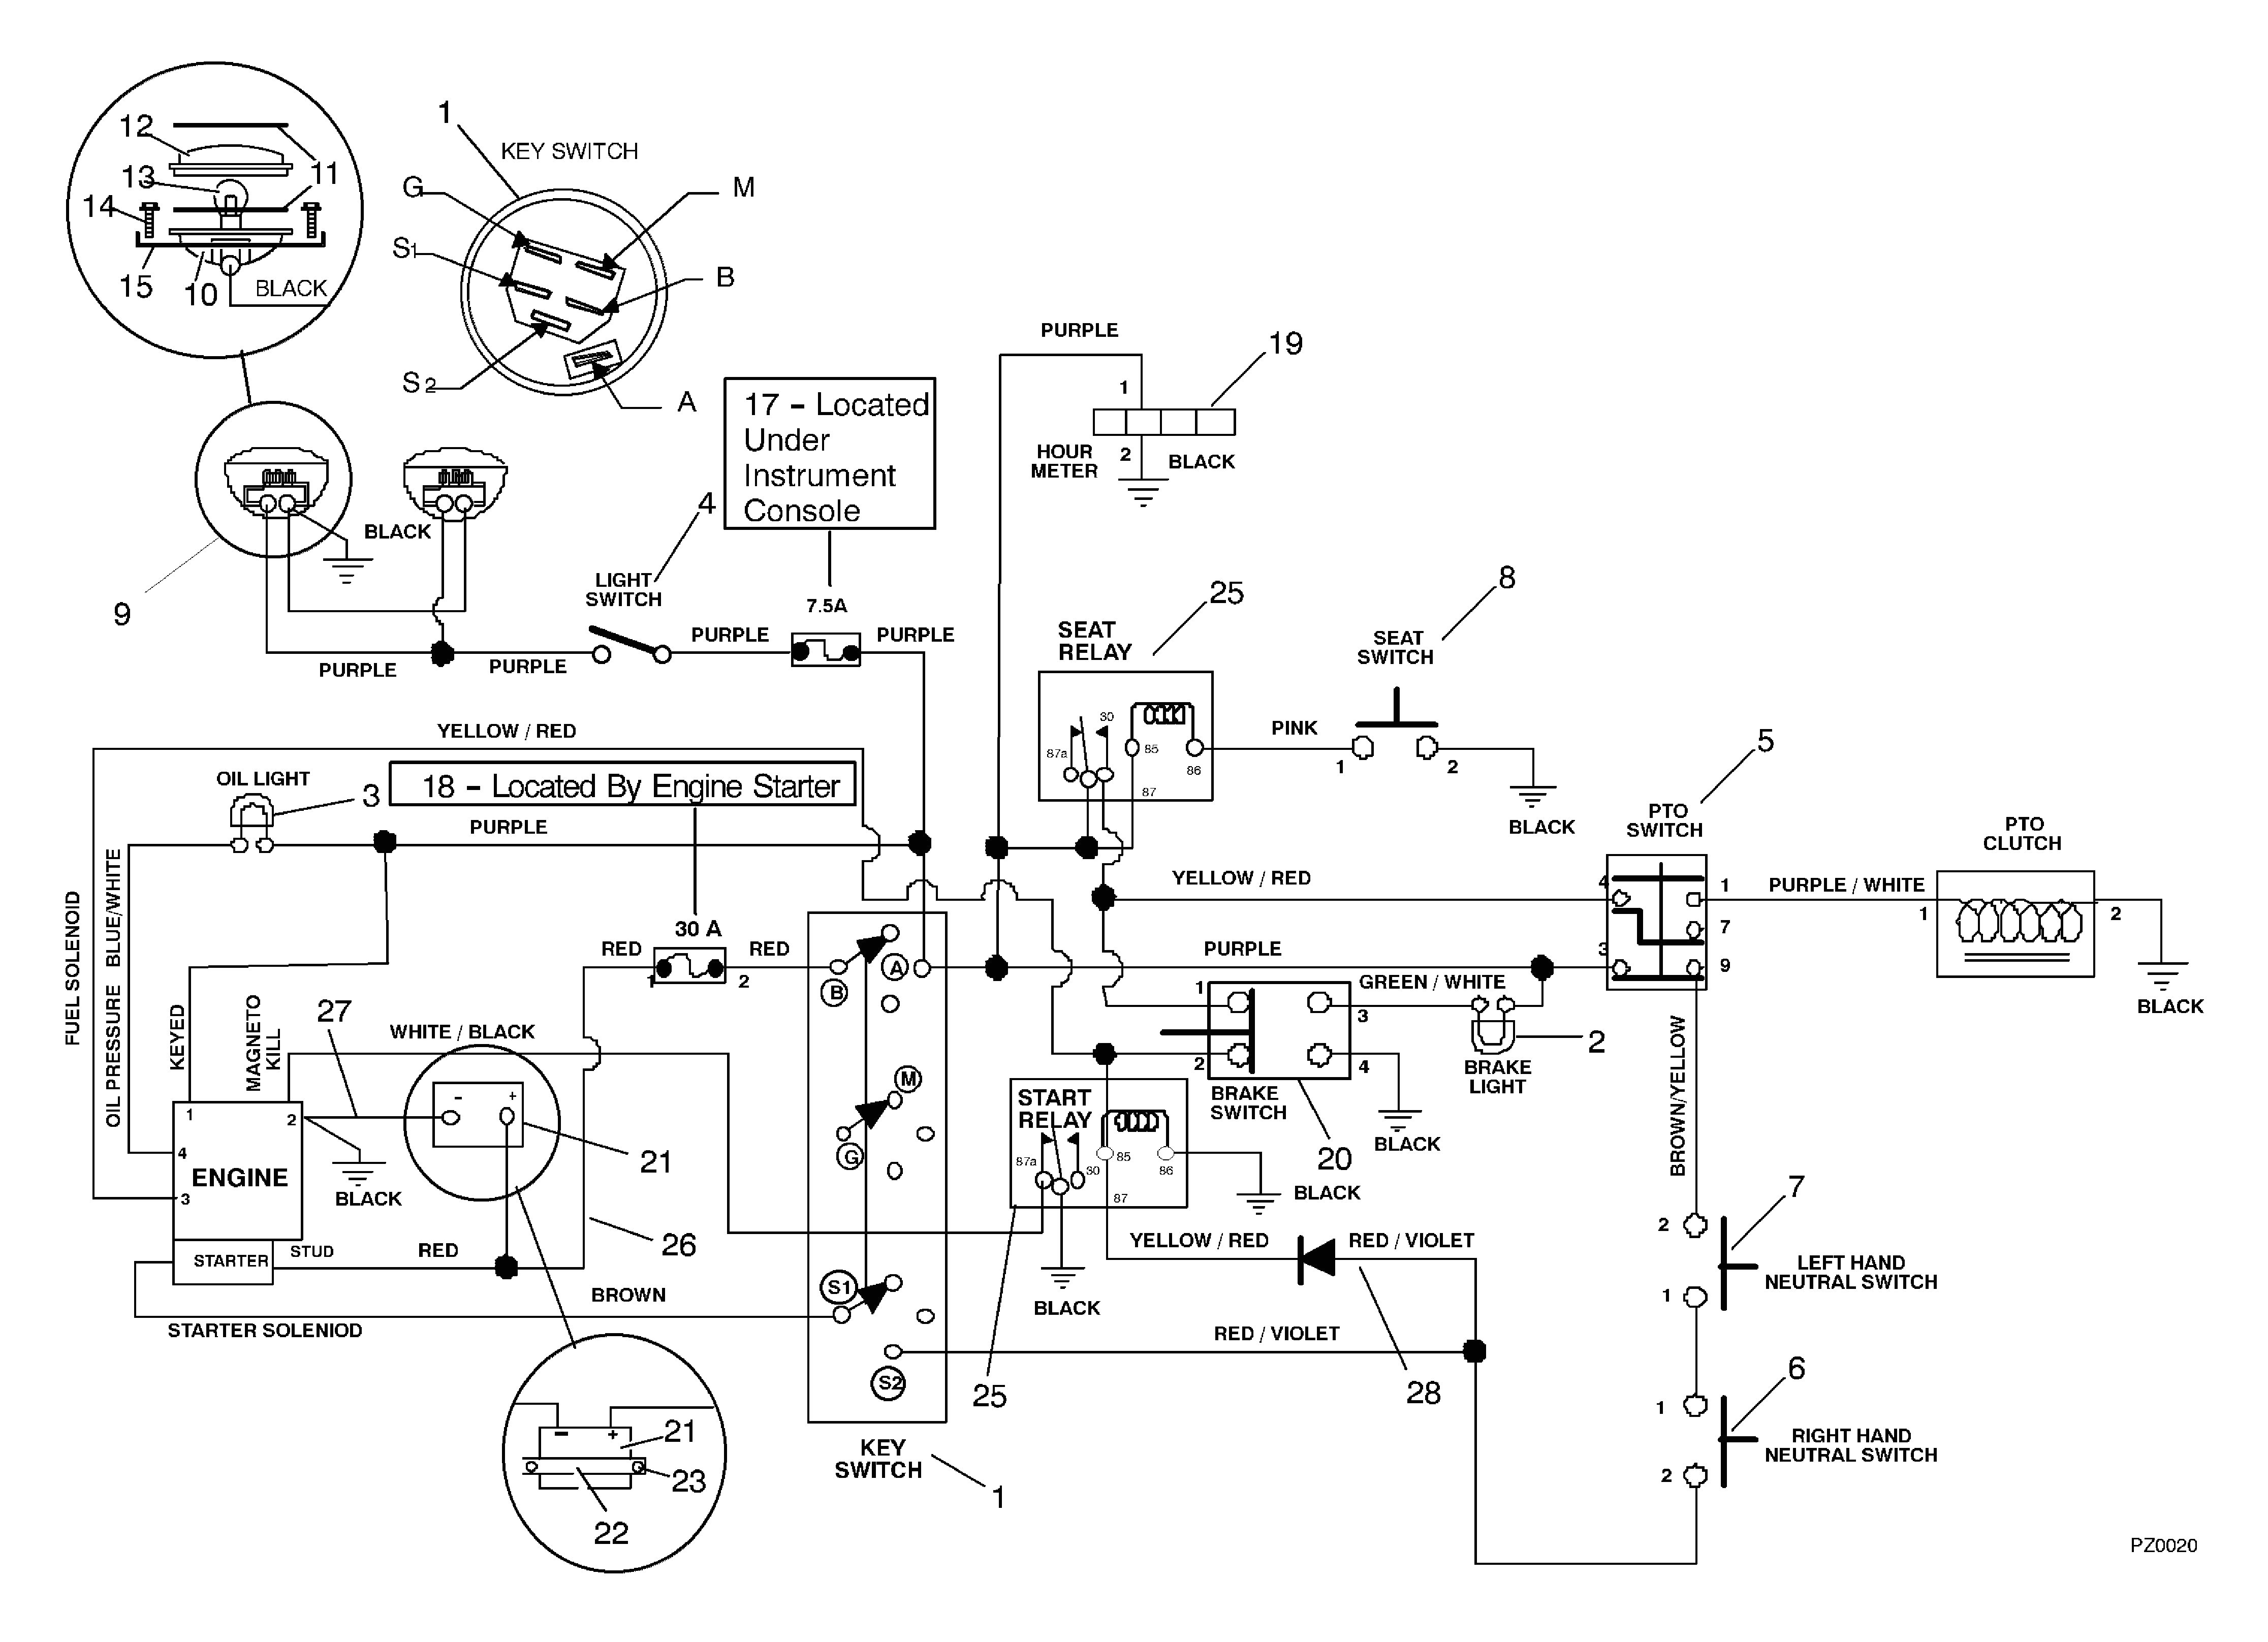 10 hp generator wiring diagram schema diagram database 10 hp generator wiring diagram